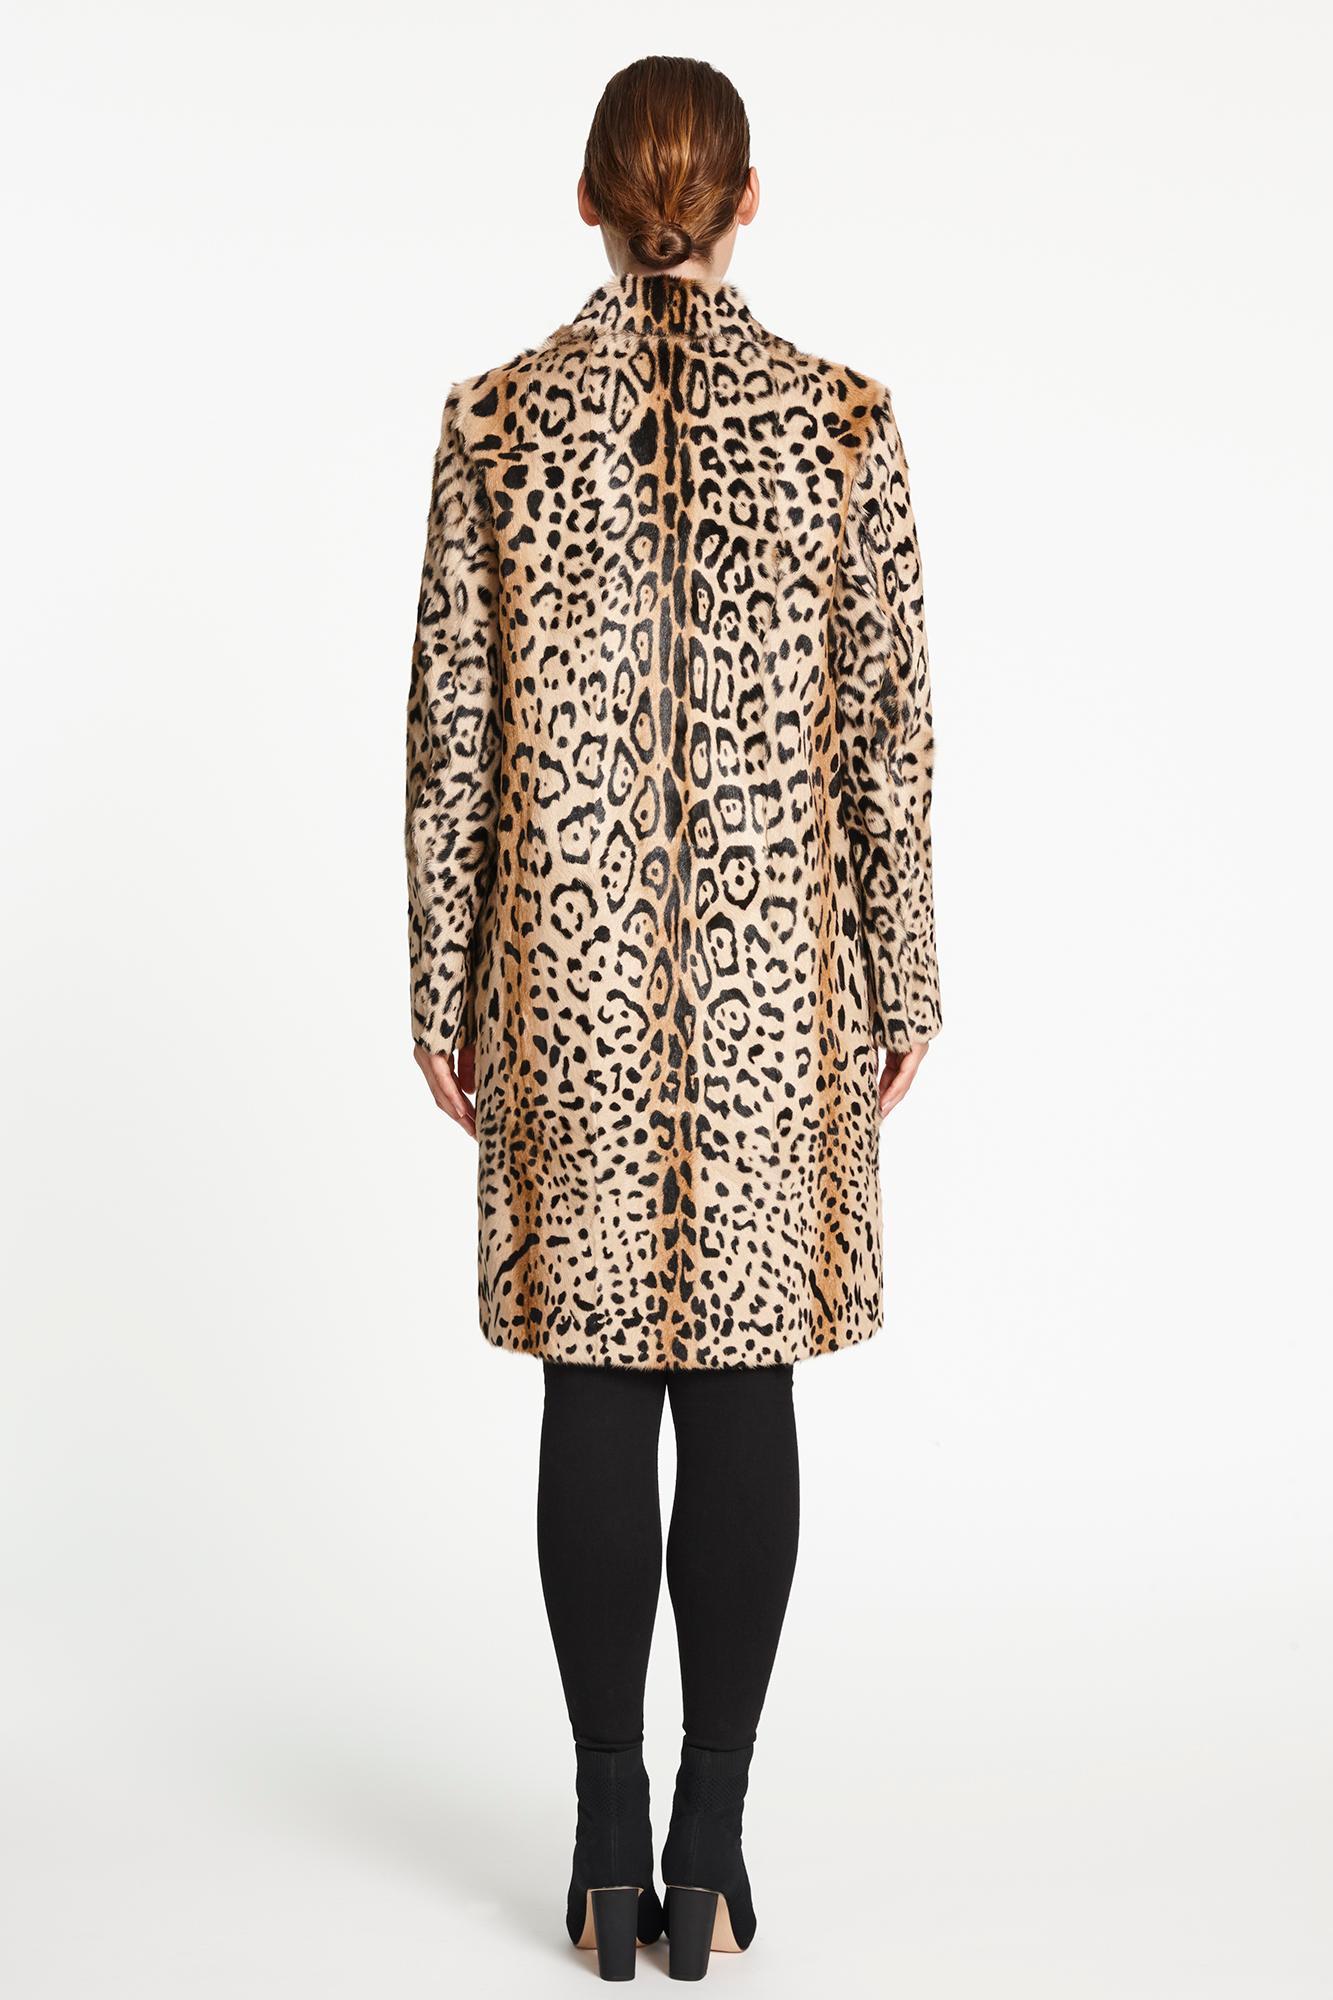 Verheyen London Leopard Print Coat in Red Ruby Goat Hair Fur UK 10 - Brand New  6